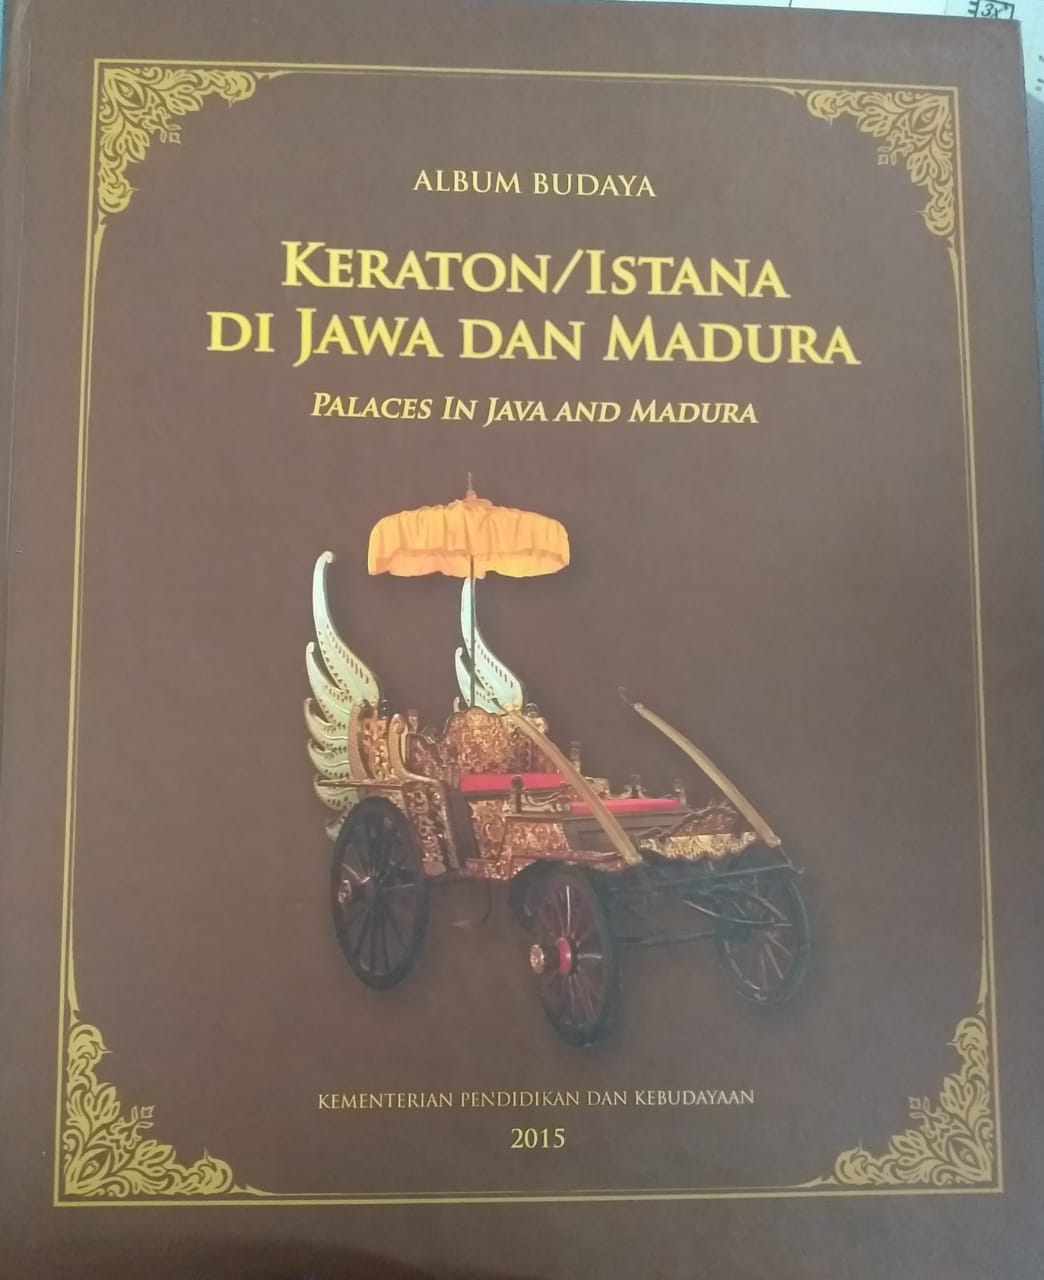 Album Budaya Keraton/Istana Di Jawa Dan Madura (Palaces In Java And Madura)